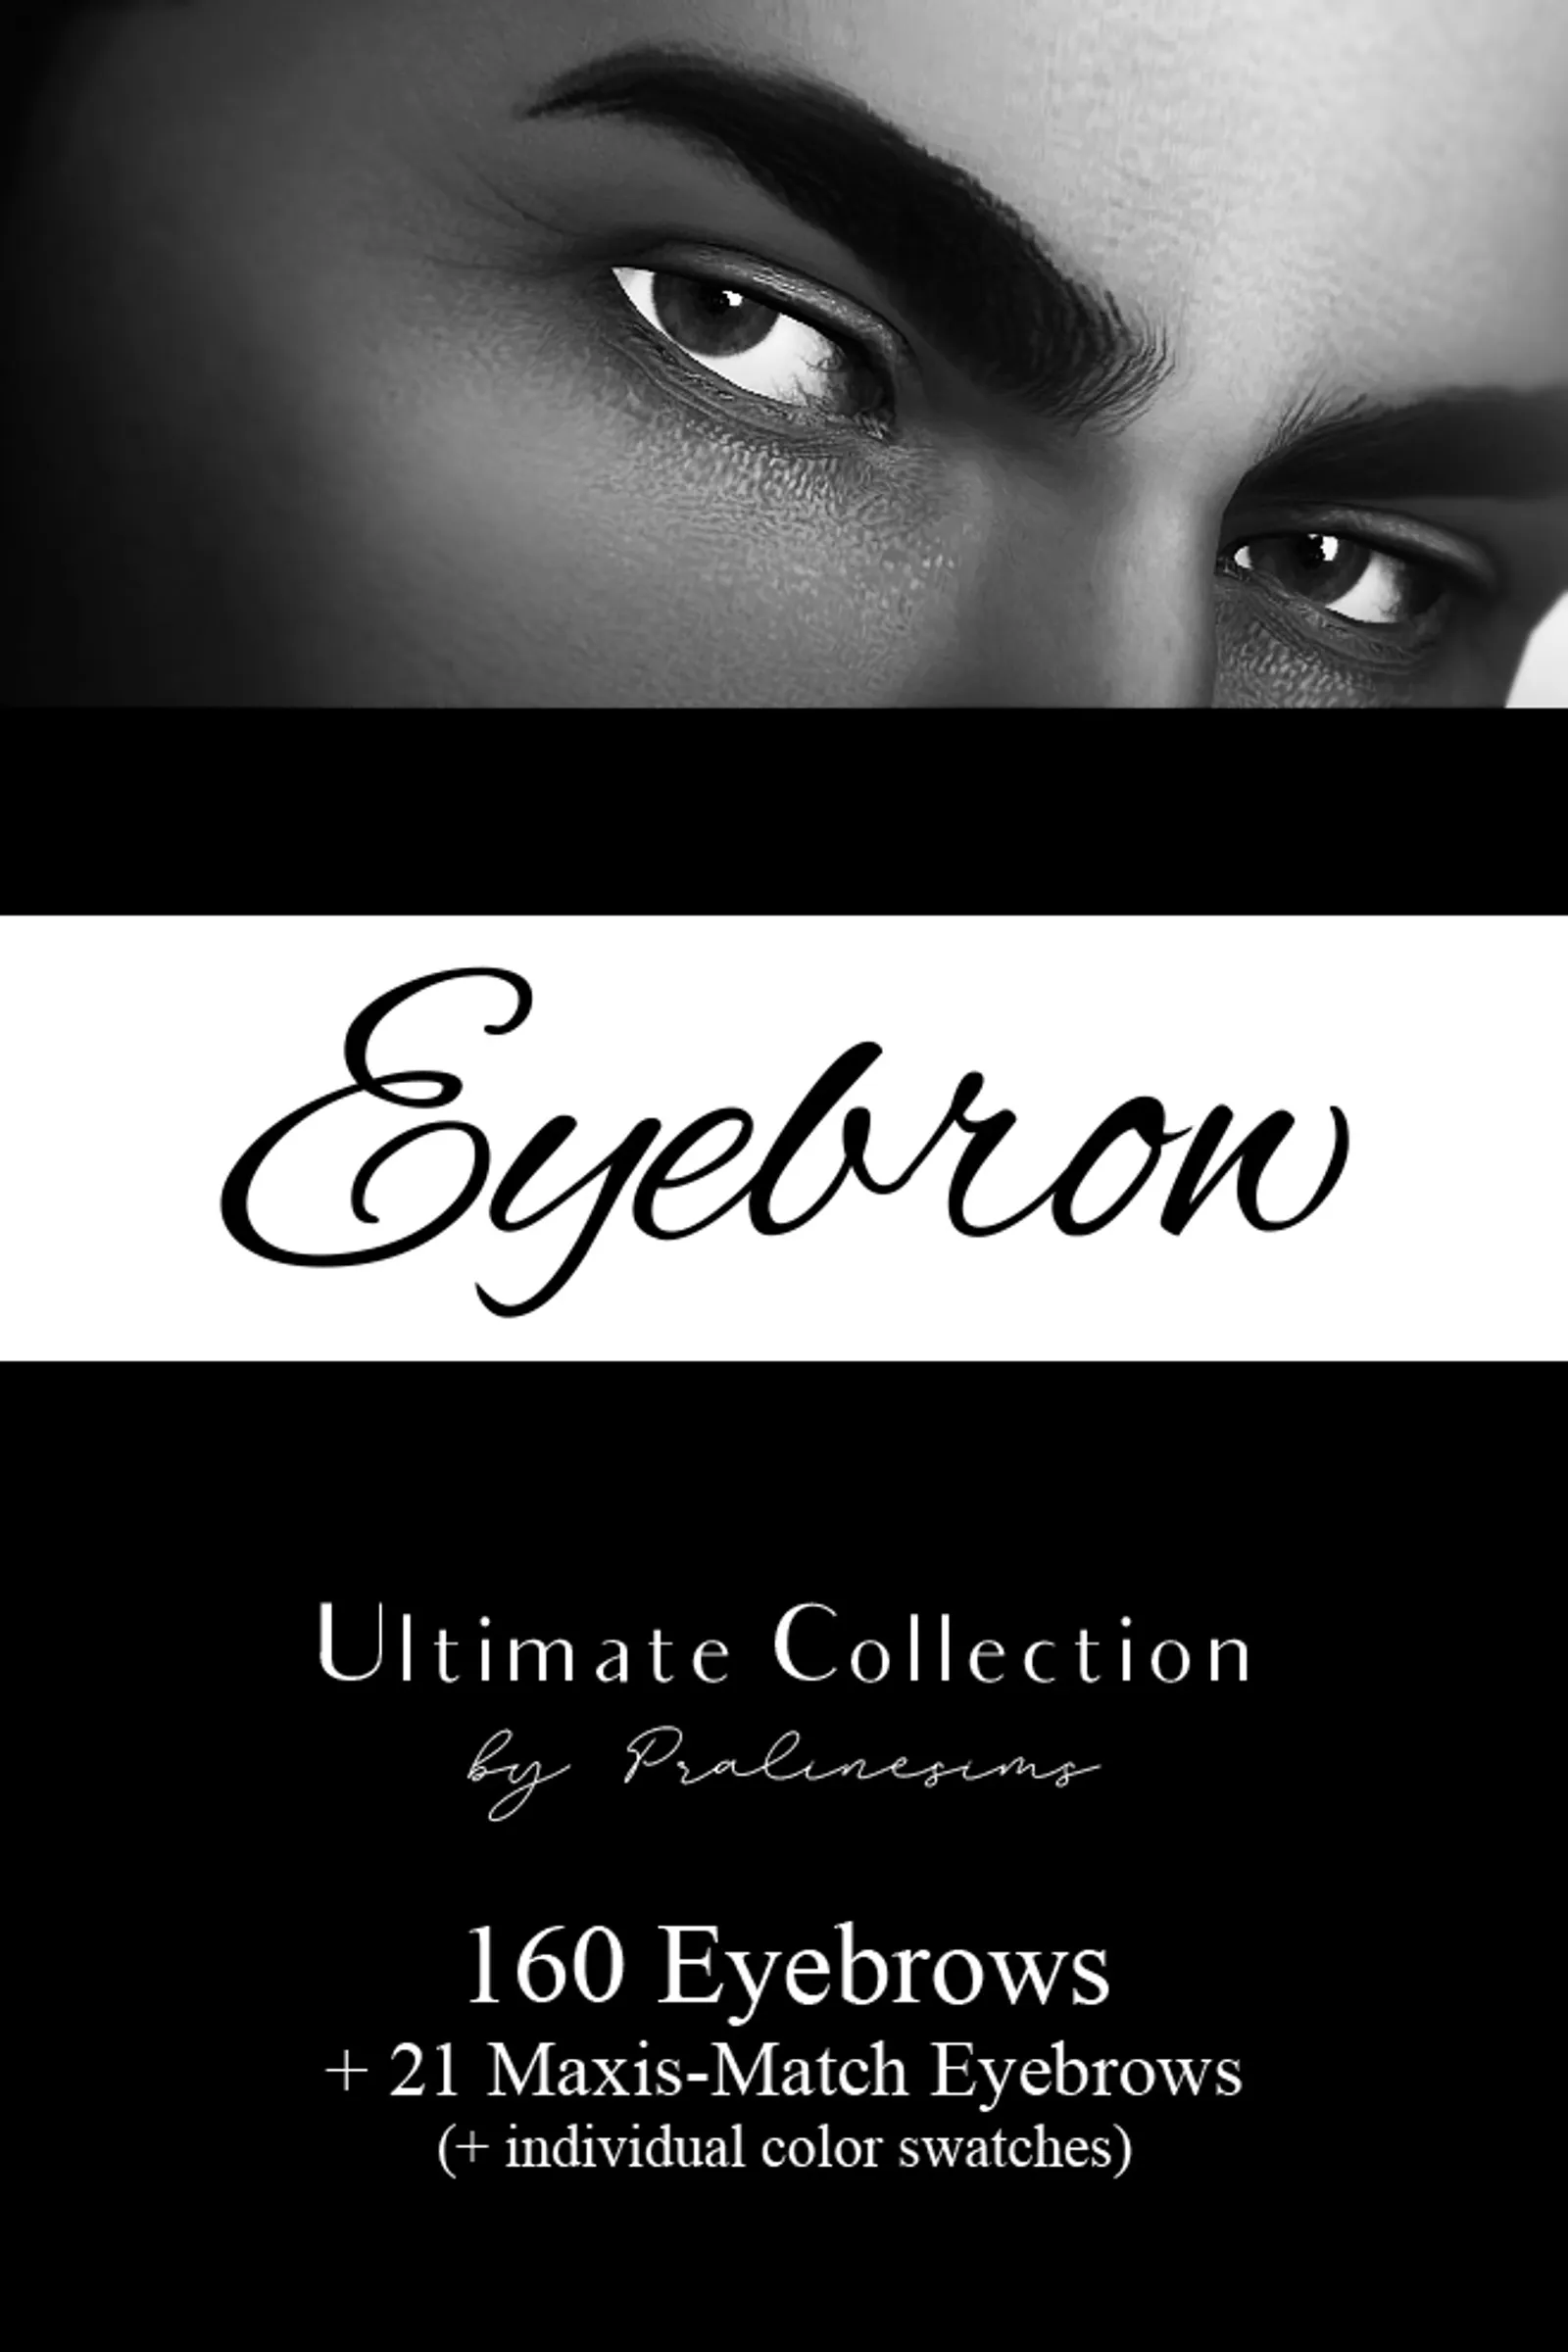 EYEBROW Ultimate Collection